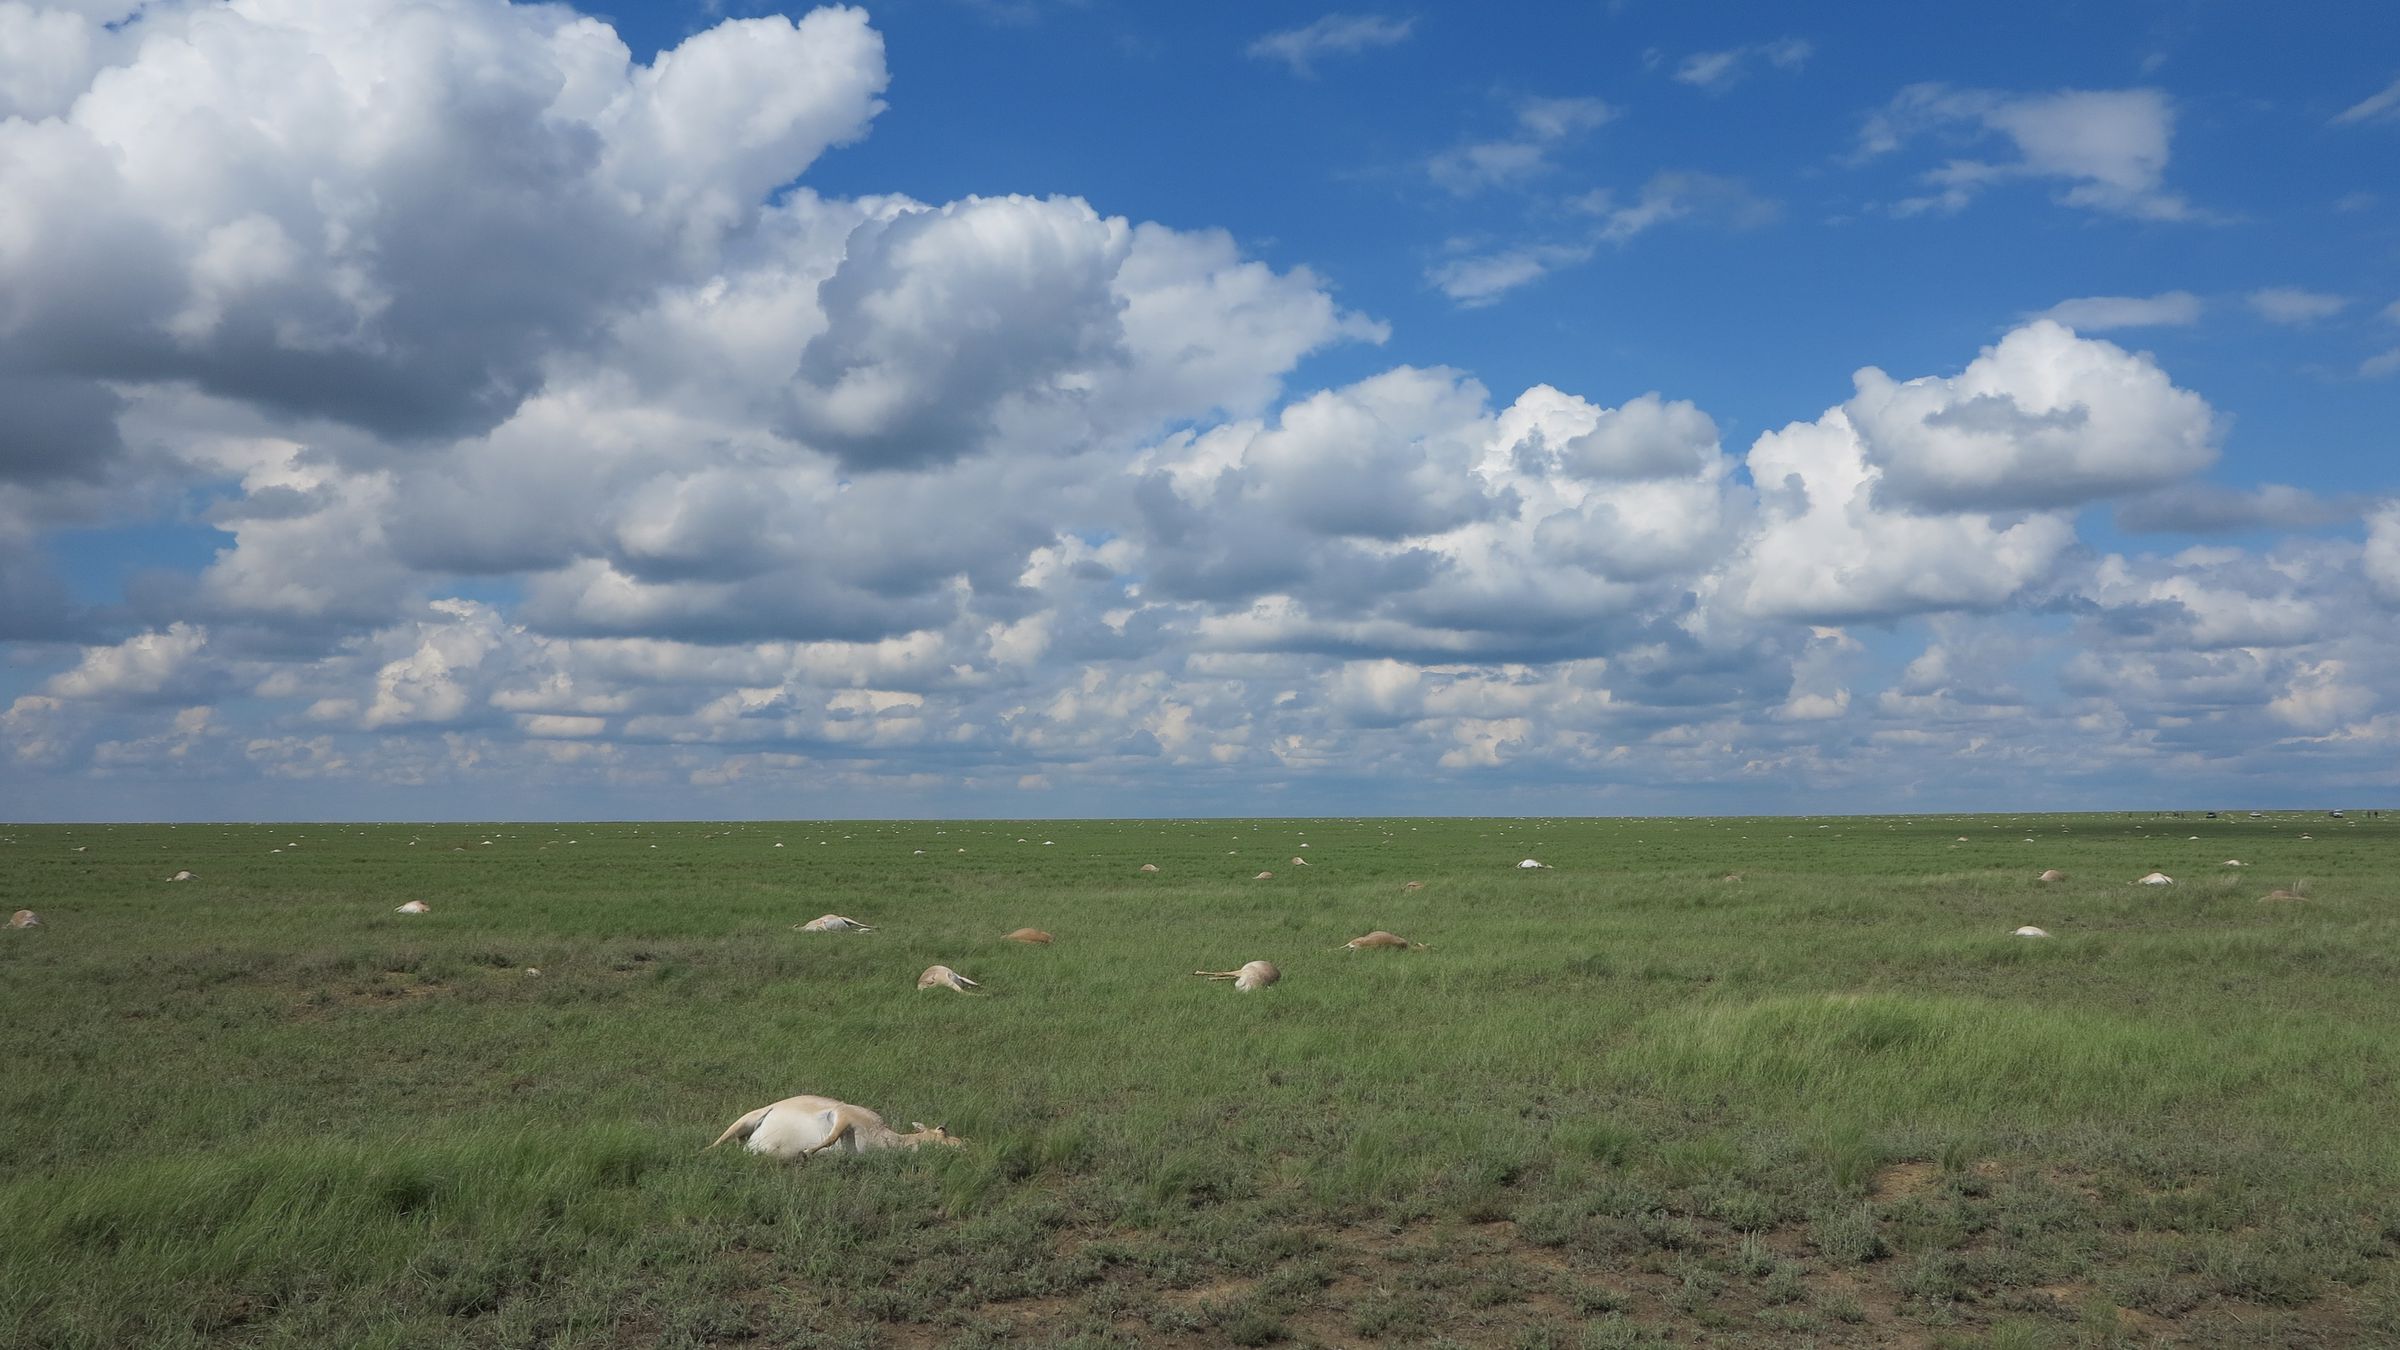 Dead saiga antelopes in the steppes of Kazakhstan, in 2015.